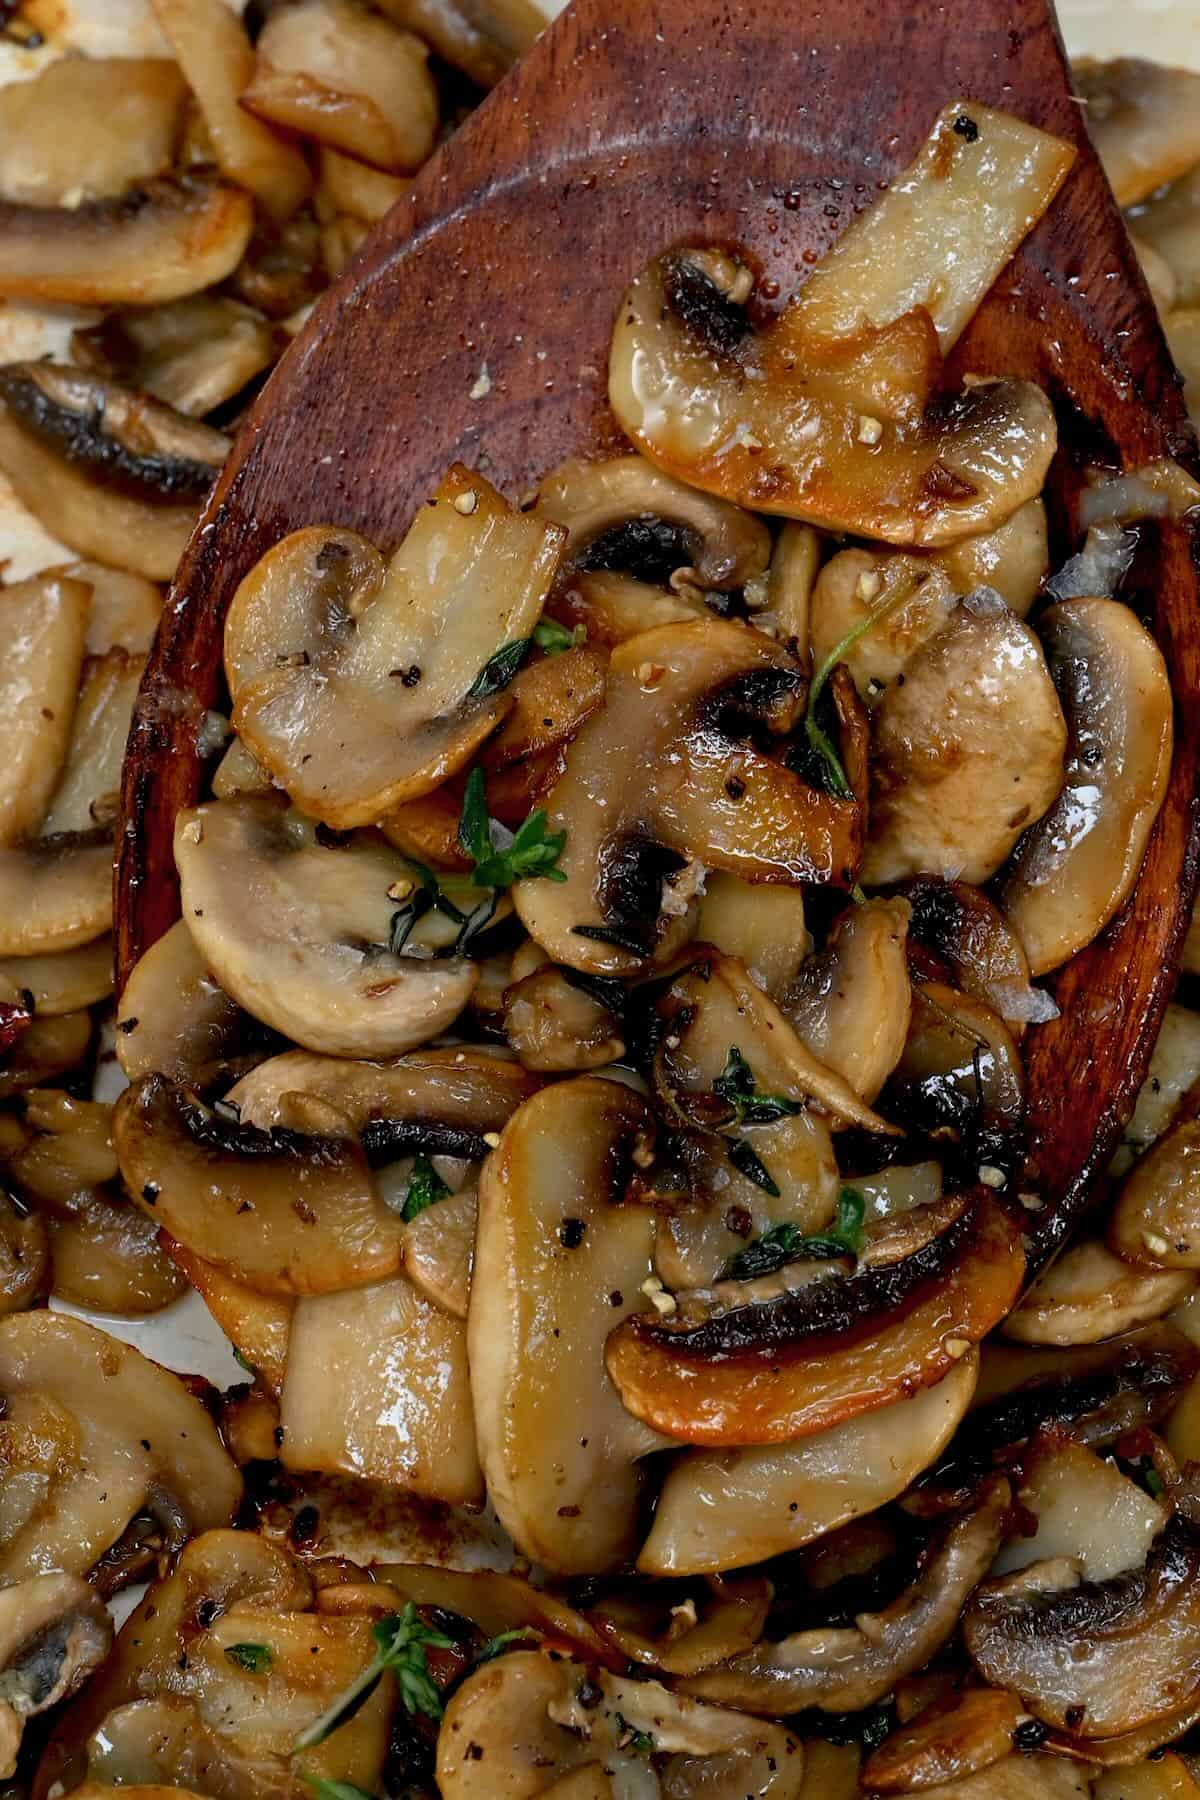 A close up of sauteed mushrooms